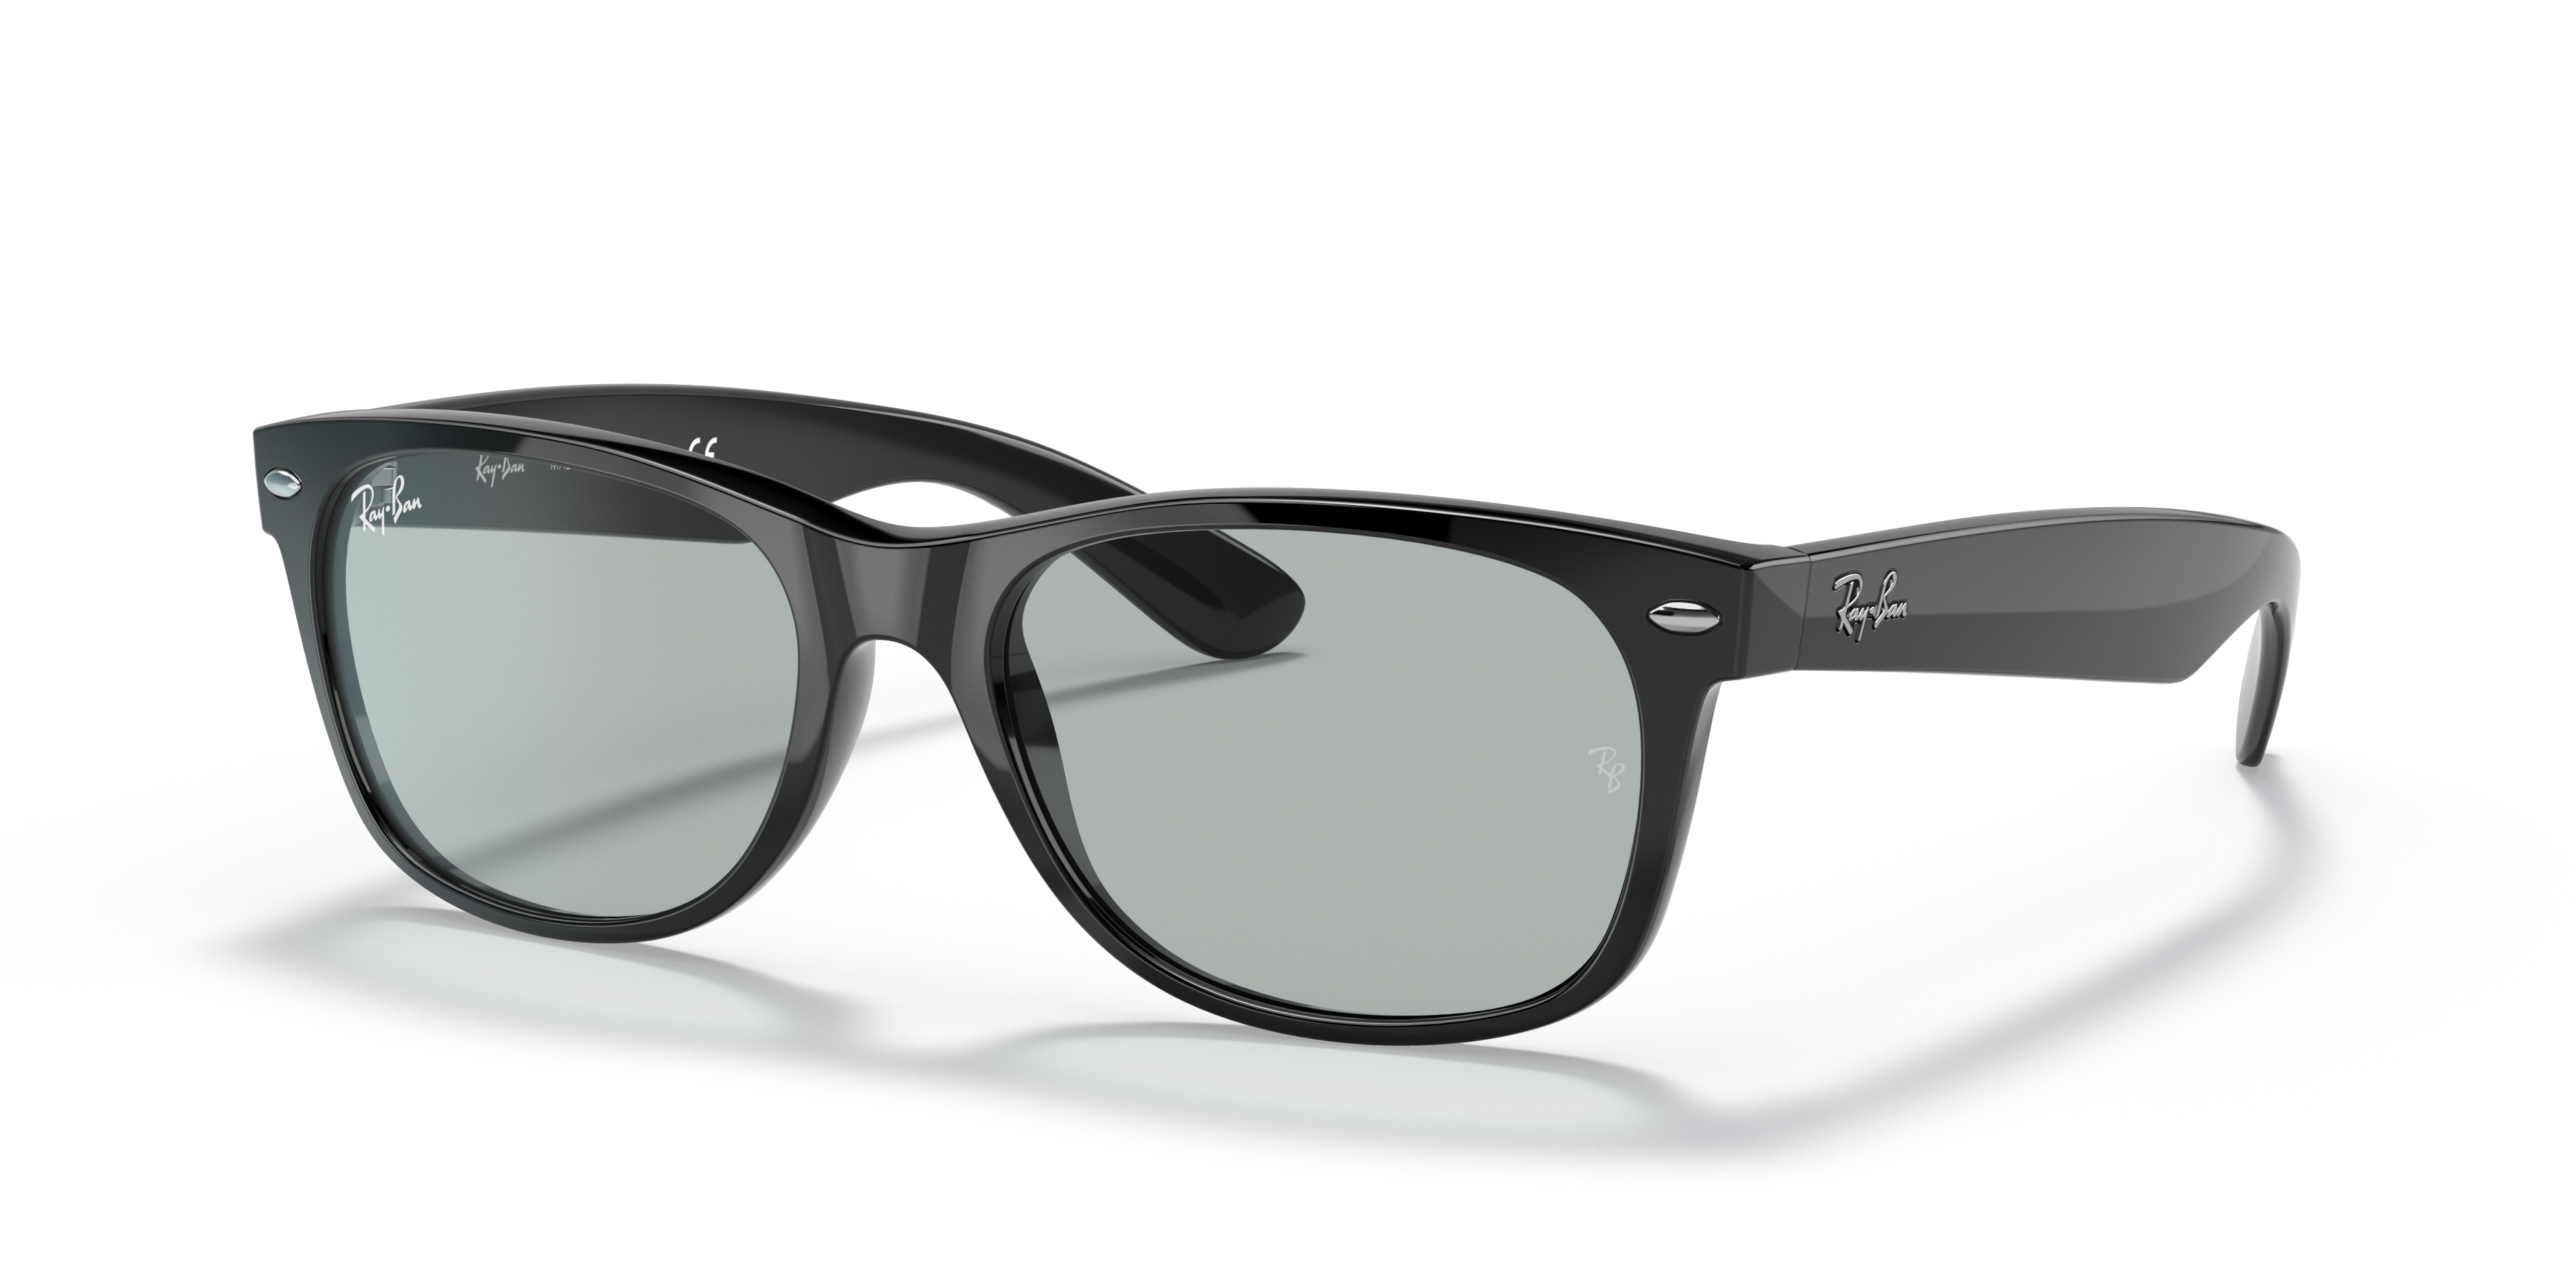 NEW WAYFARER WASHED LENSES Sunglasses in Black and Light Grey